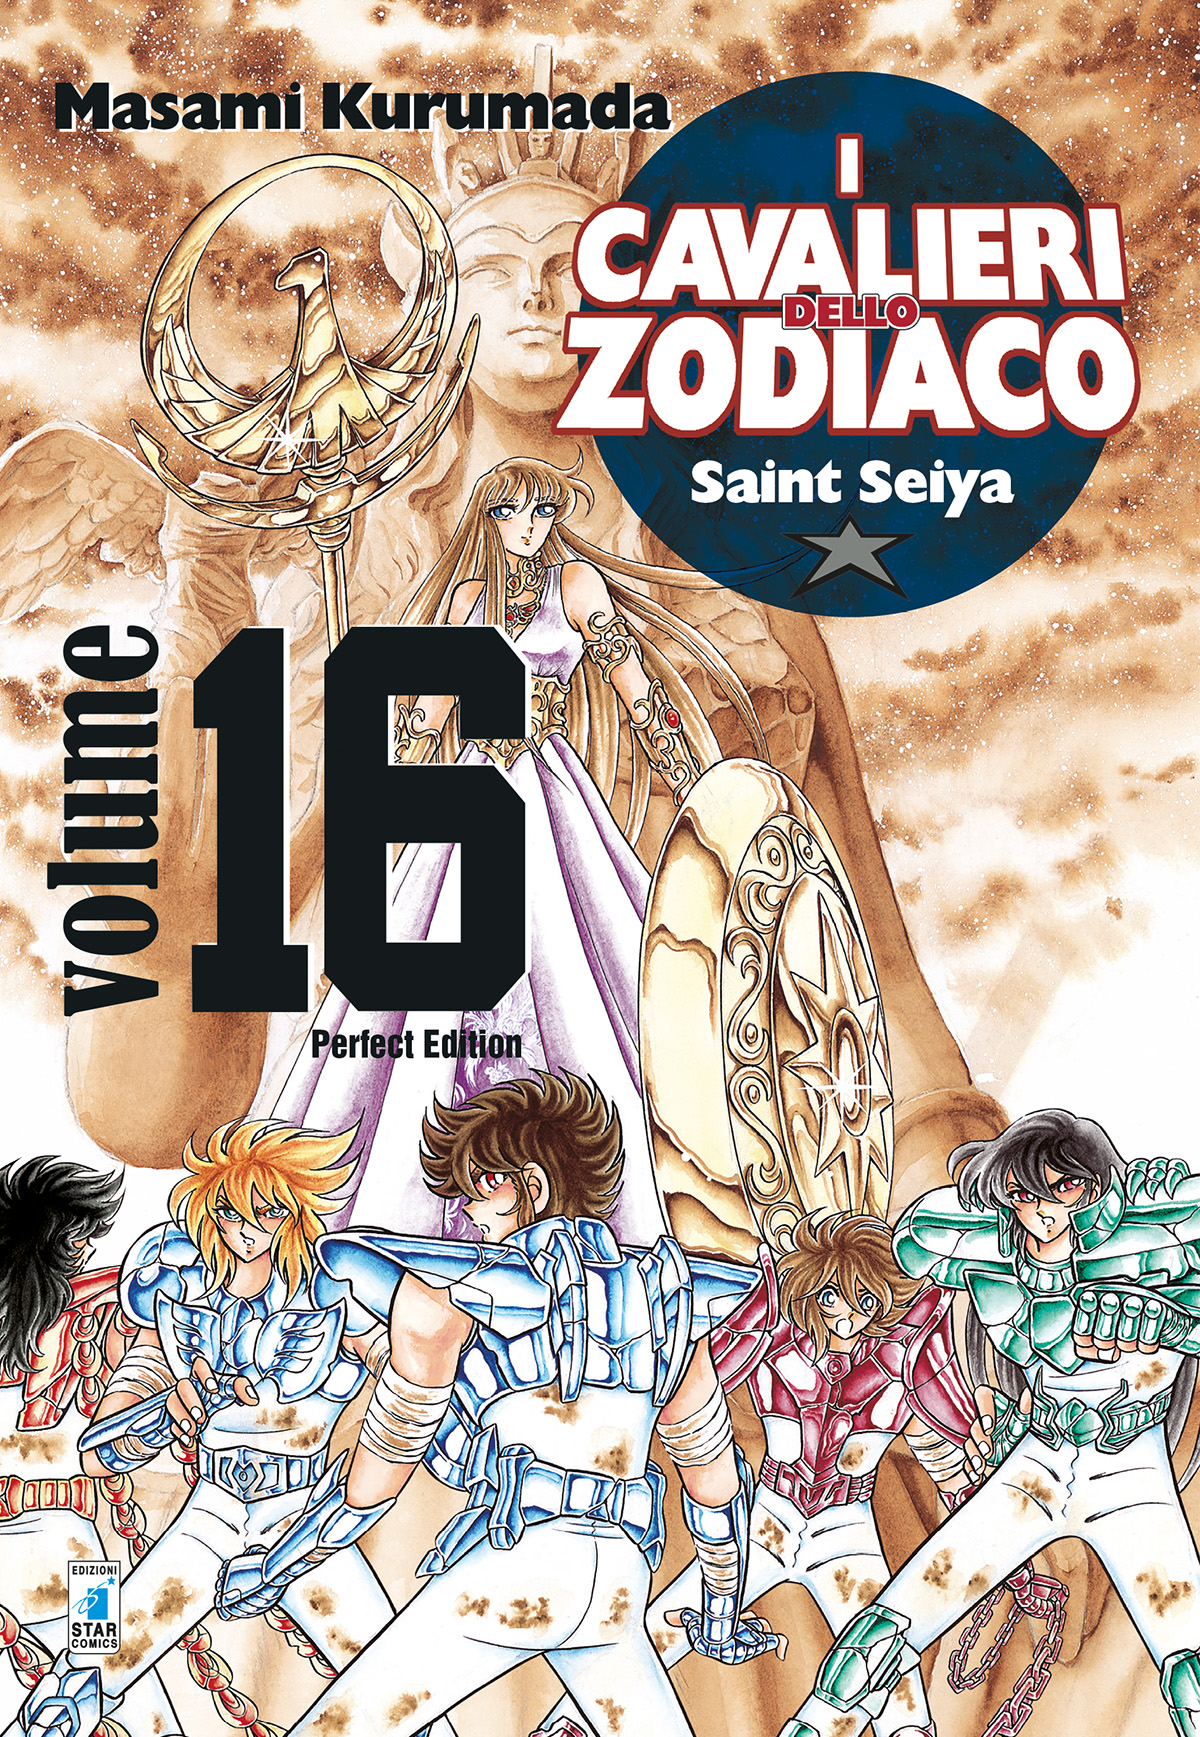 manga STAR COMICS SAINT SEIYA I CAVALIERI DELLO ZODIACO PERFECT EDITION numero 9 